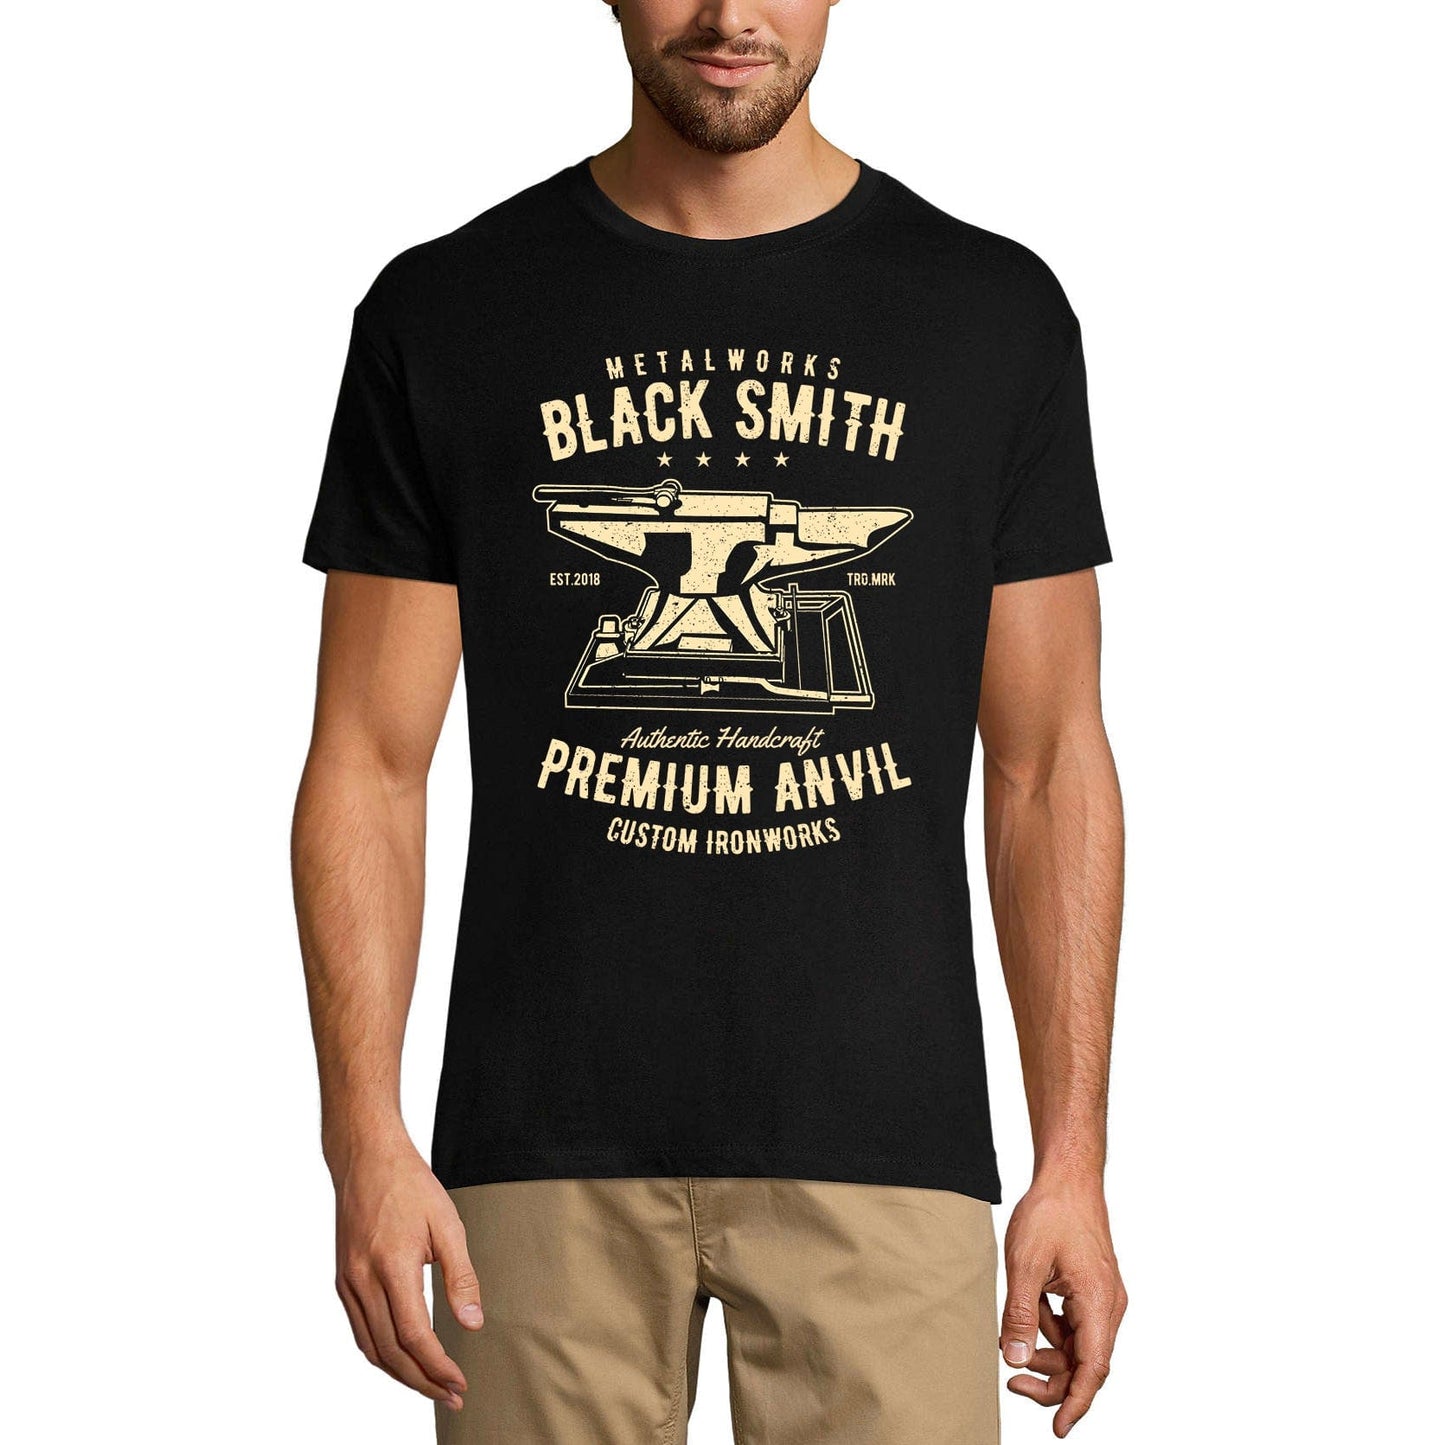 ULTRABASIC Men's T-Shirt Metalworks Black Smith - Custom Ironworks Blacksmith Tee Shirt